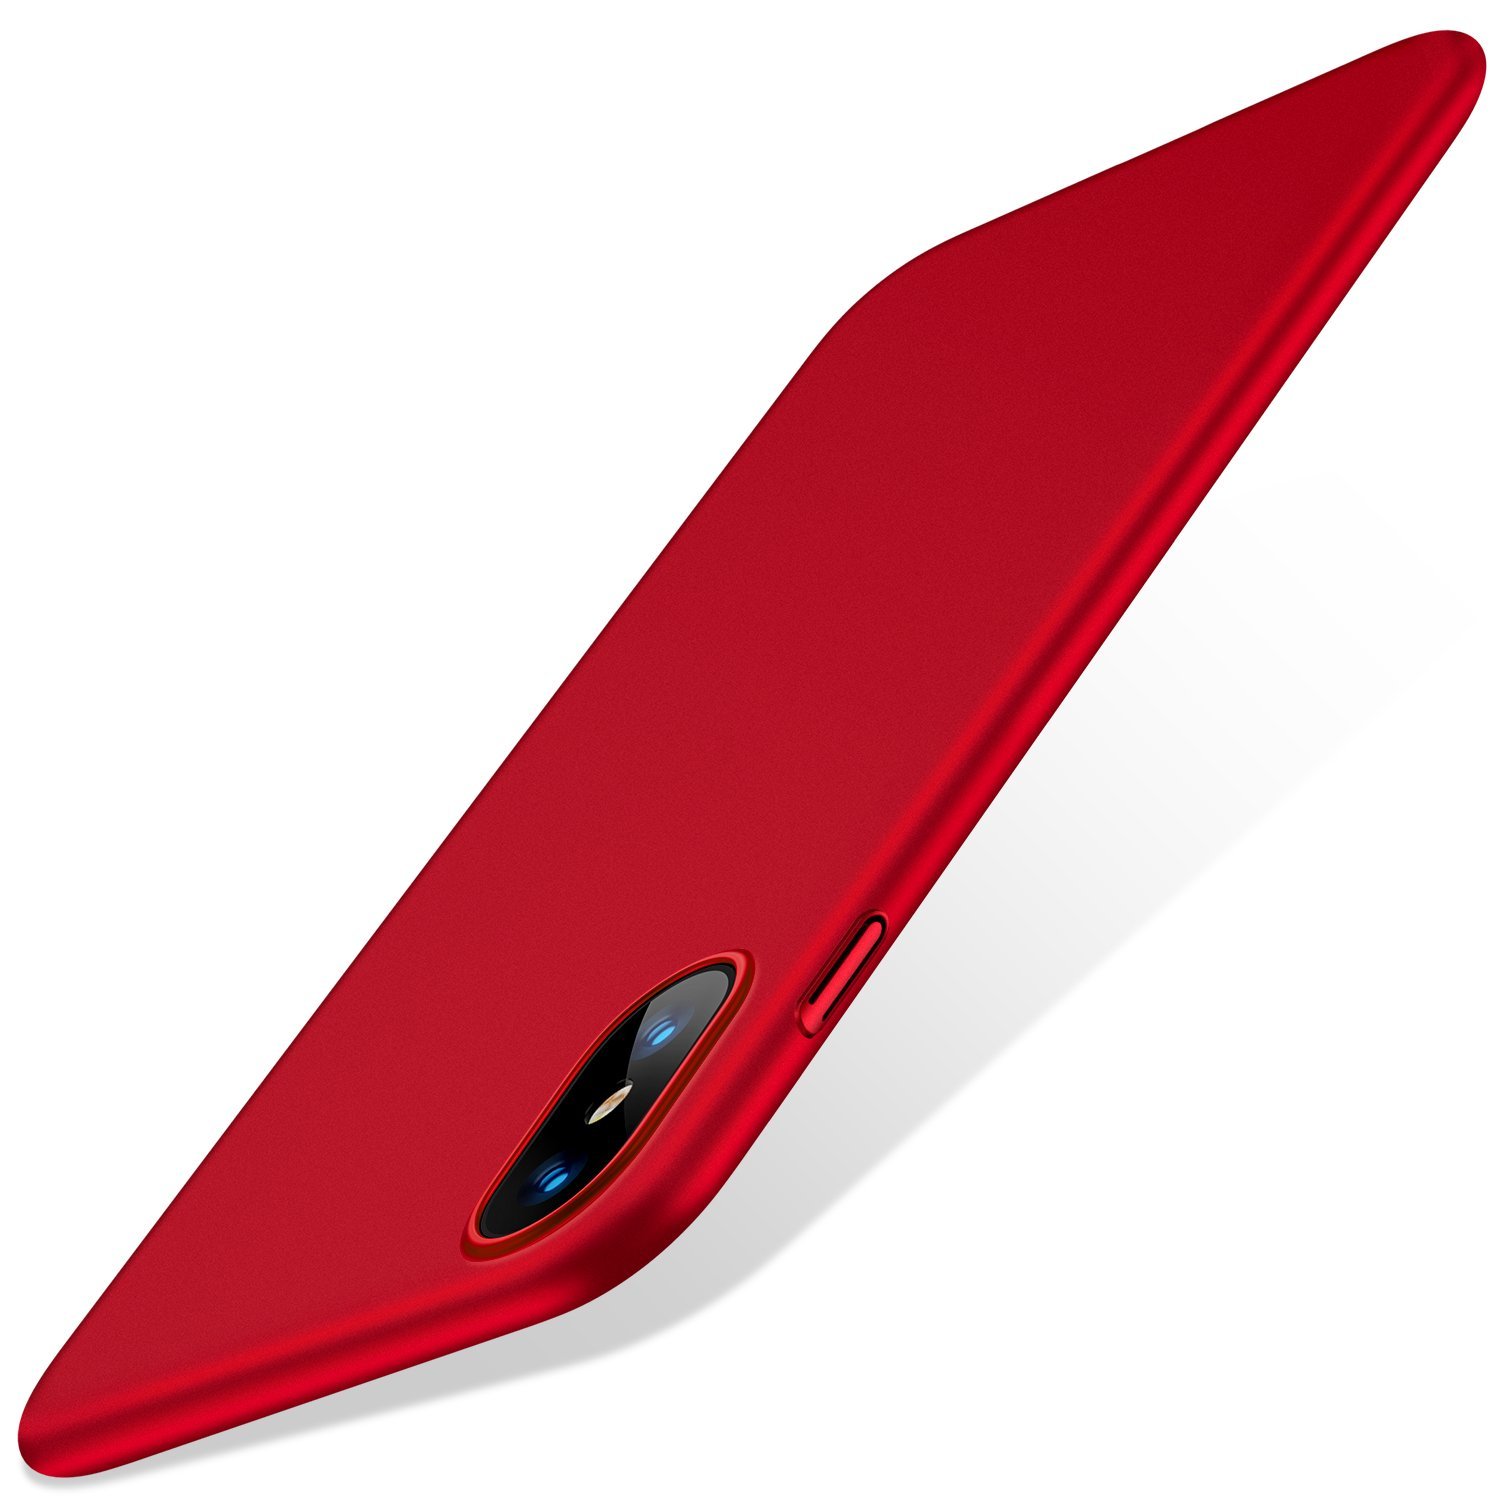 iPhone X con funda roja